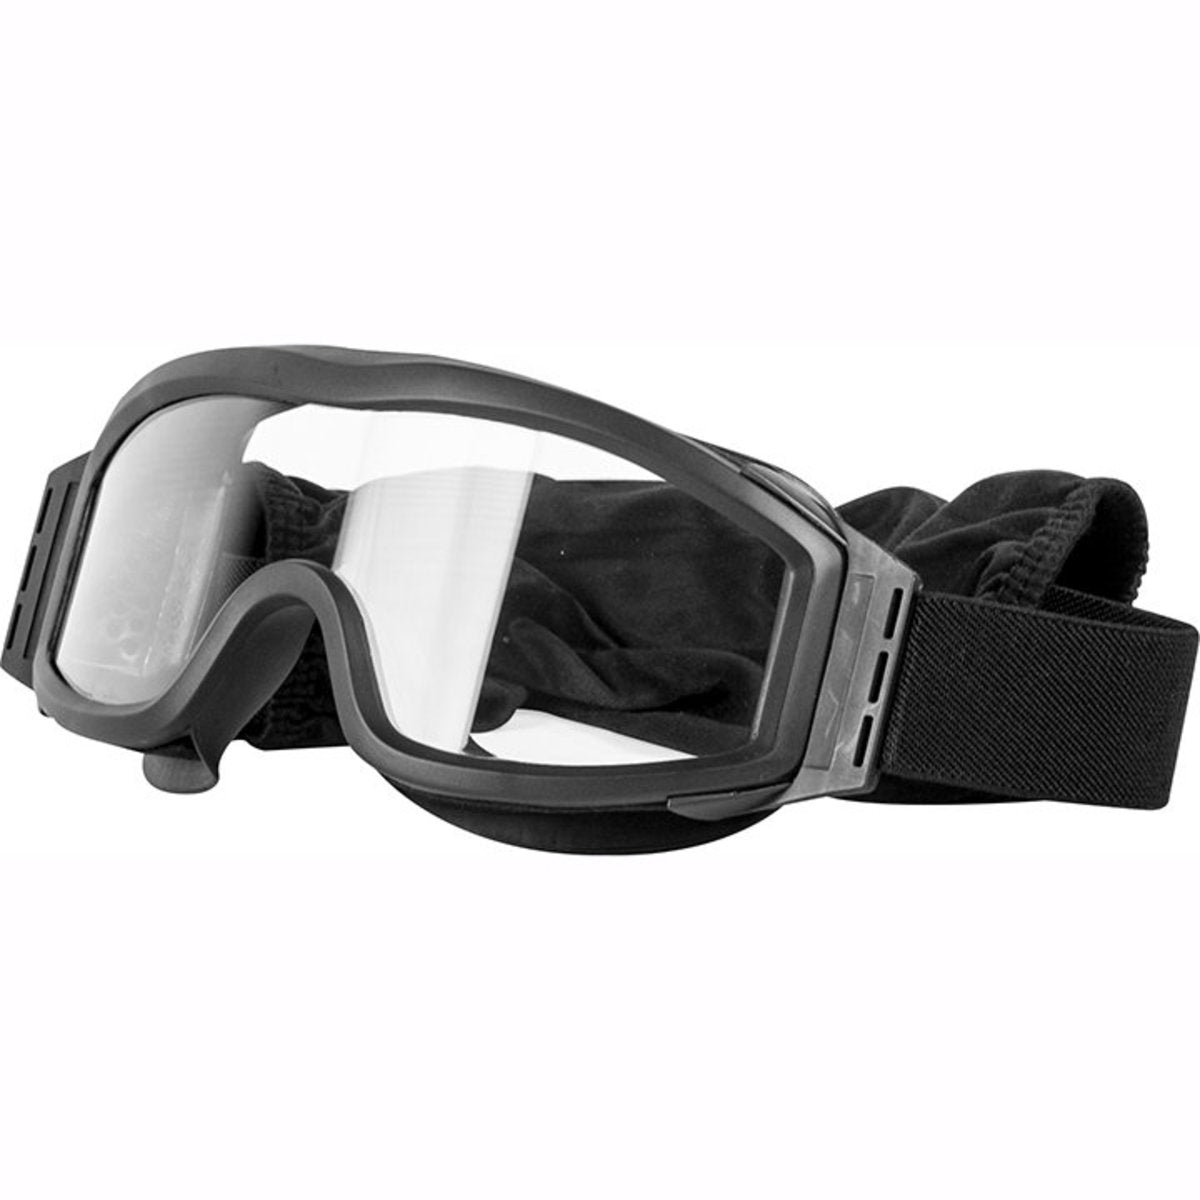 Valken Tango Single Lens Airsoft Goggles